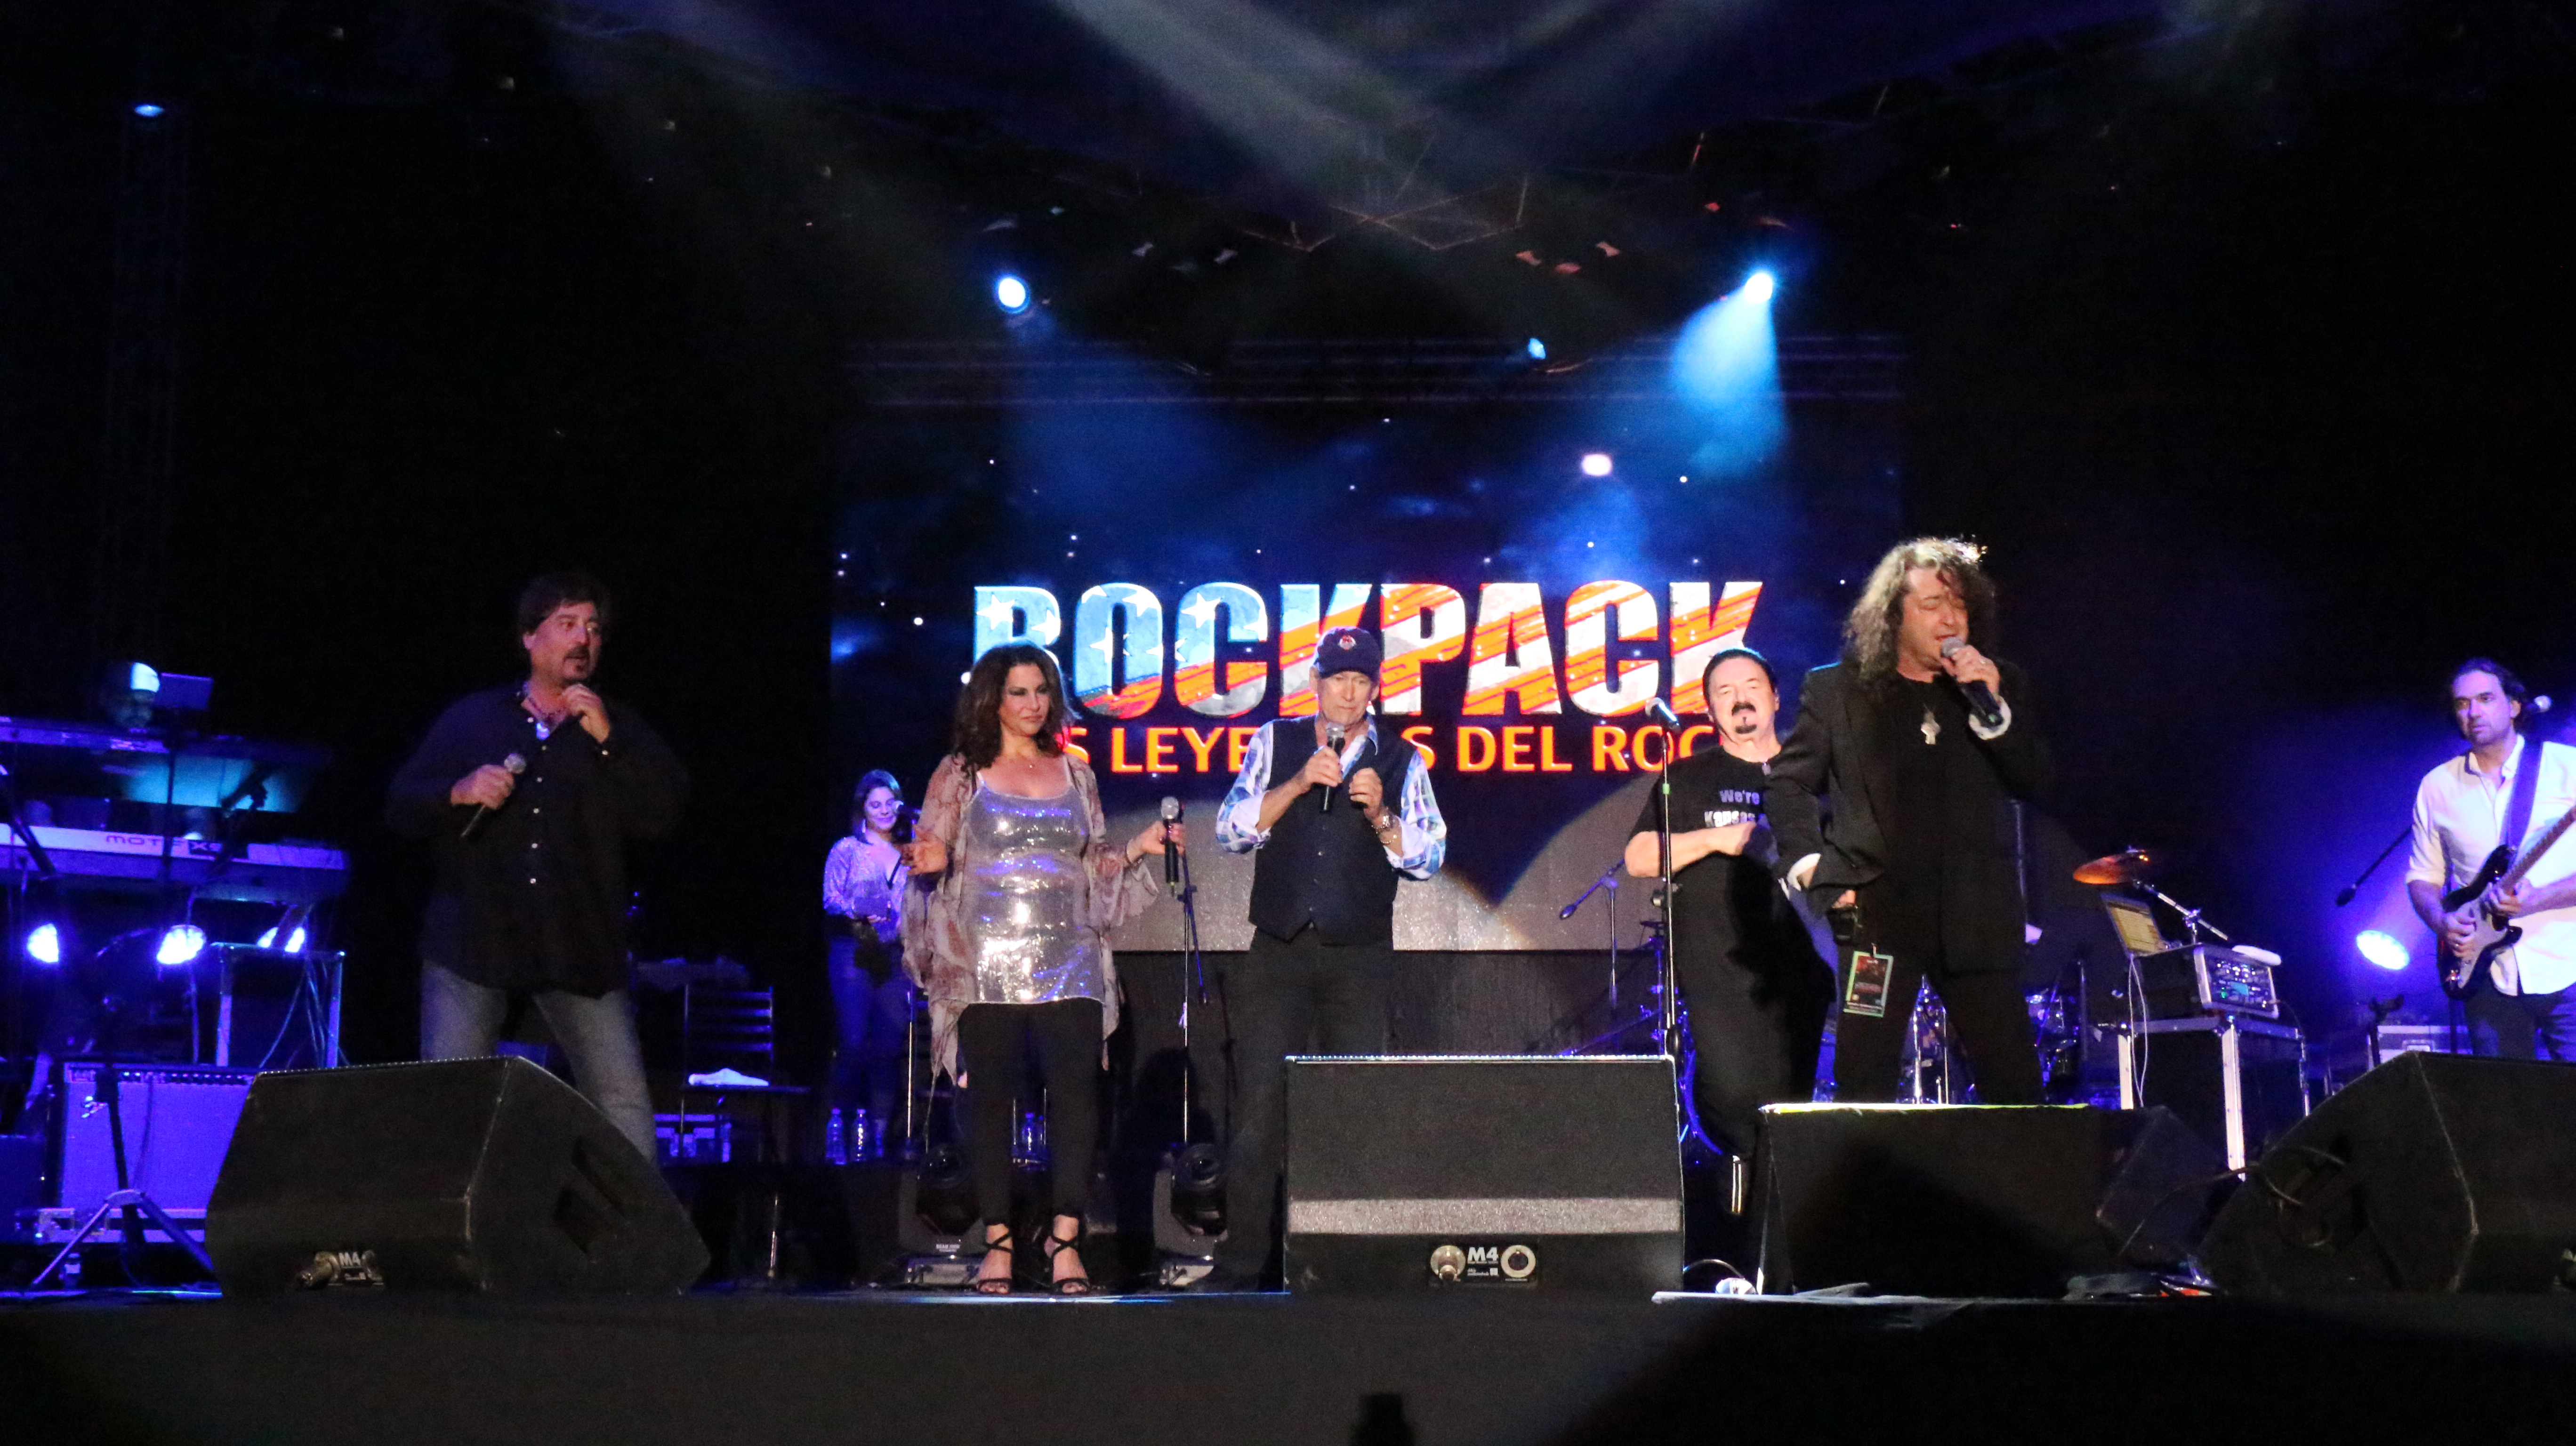 Banpro presentó a Rock Pack